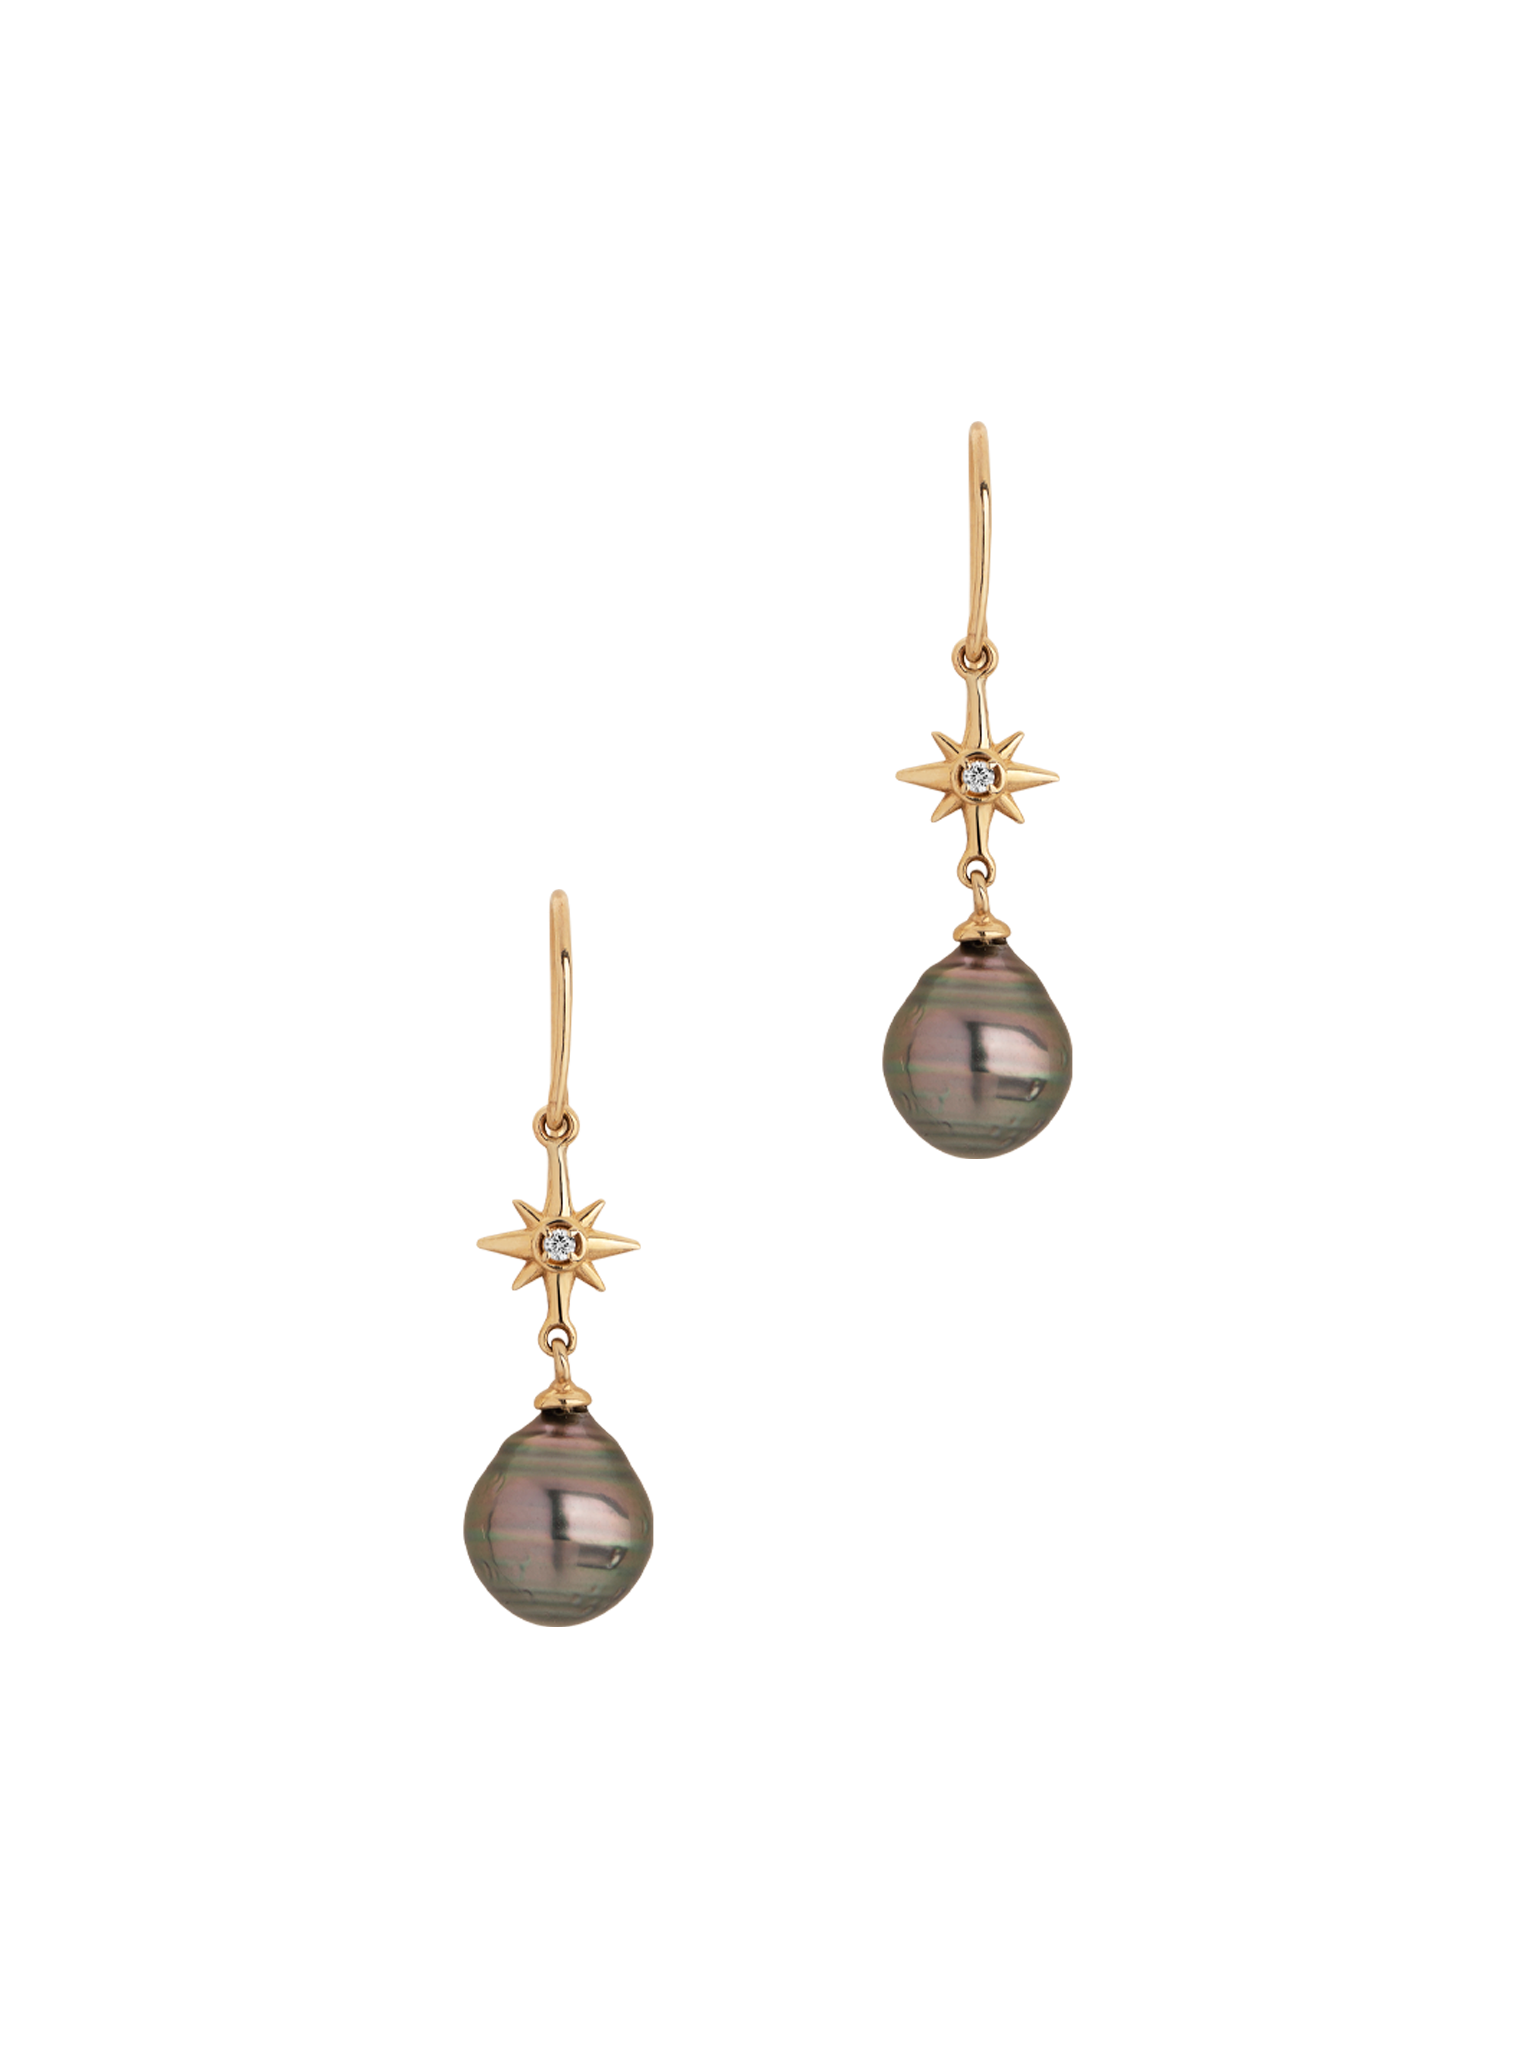 14k gold & diamond north star ear-drops with tahitian pearl